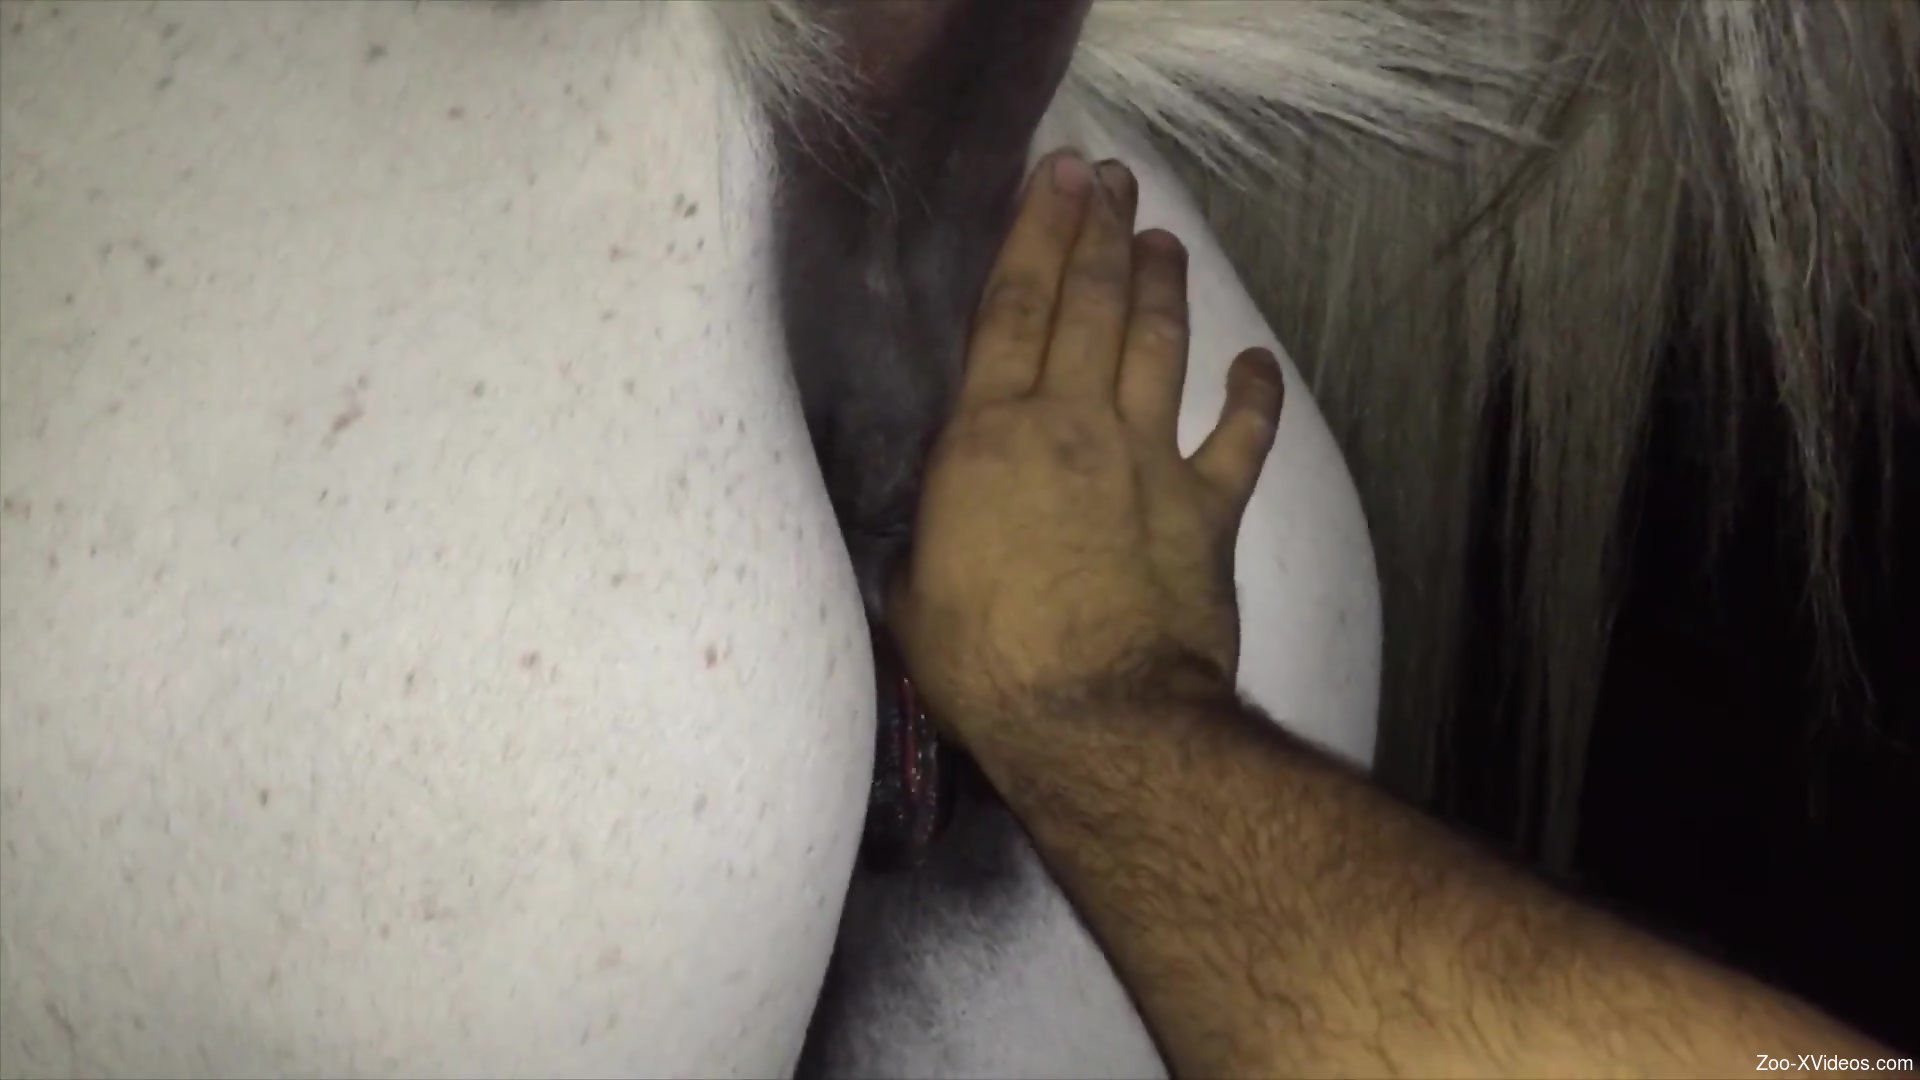 Man finger fucks horse's wet vagina in advance to fucking it